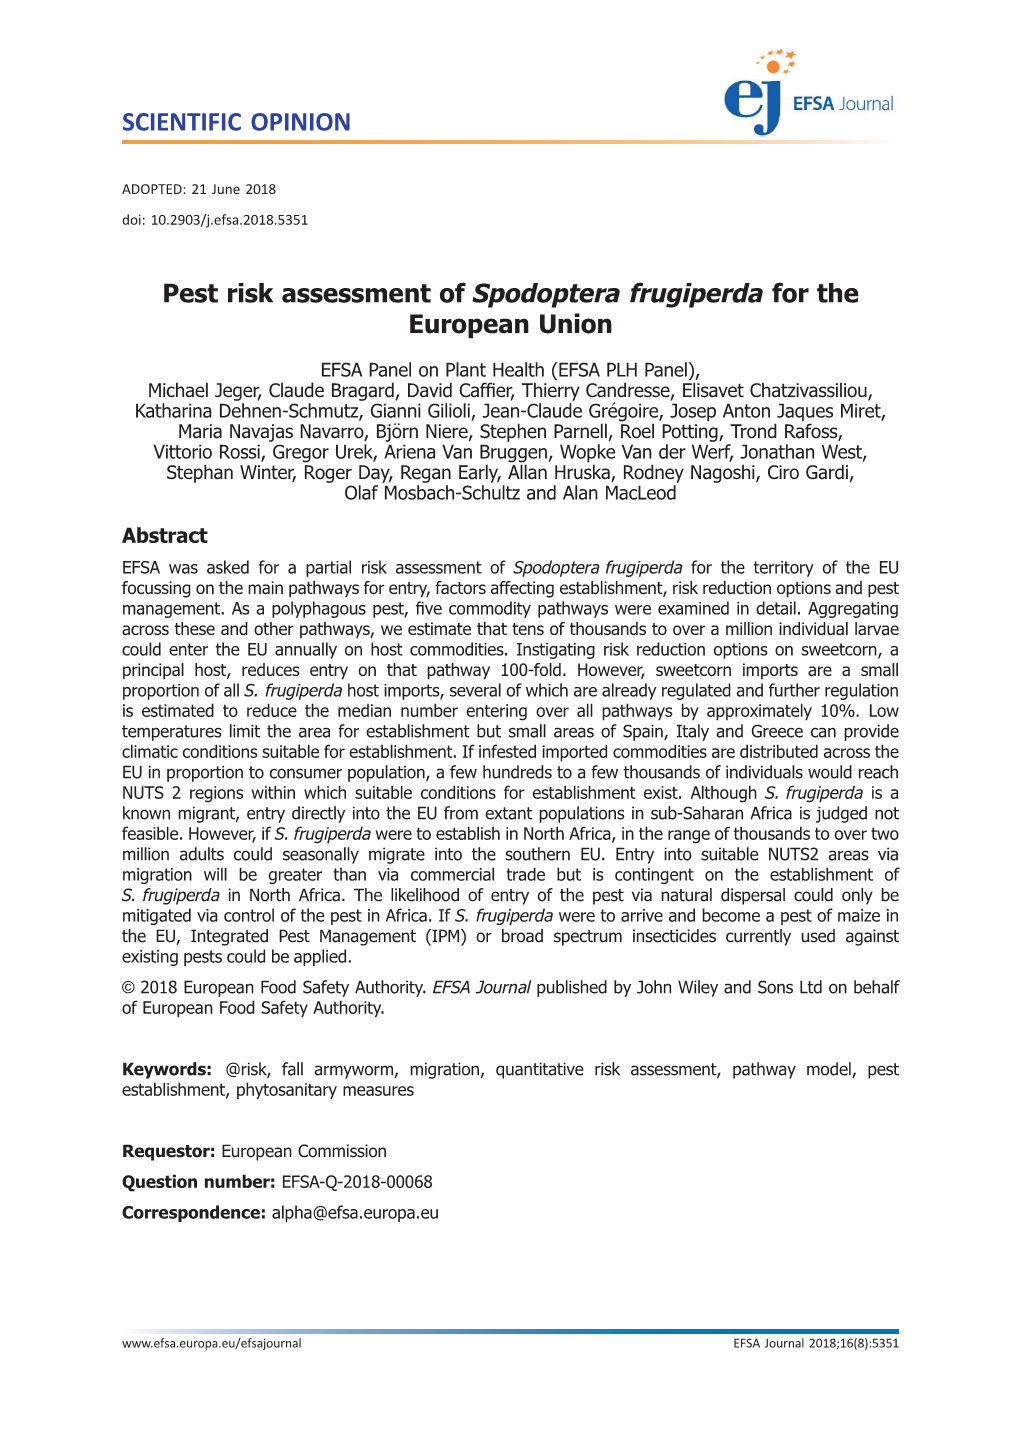 Pest Risk Assessment of Spodoptera&#X00a0